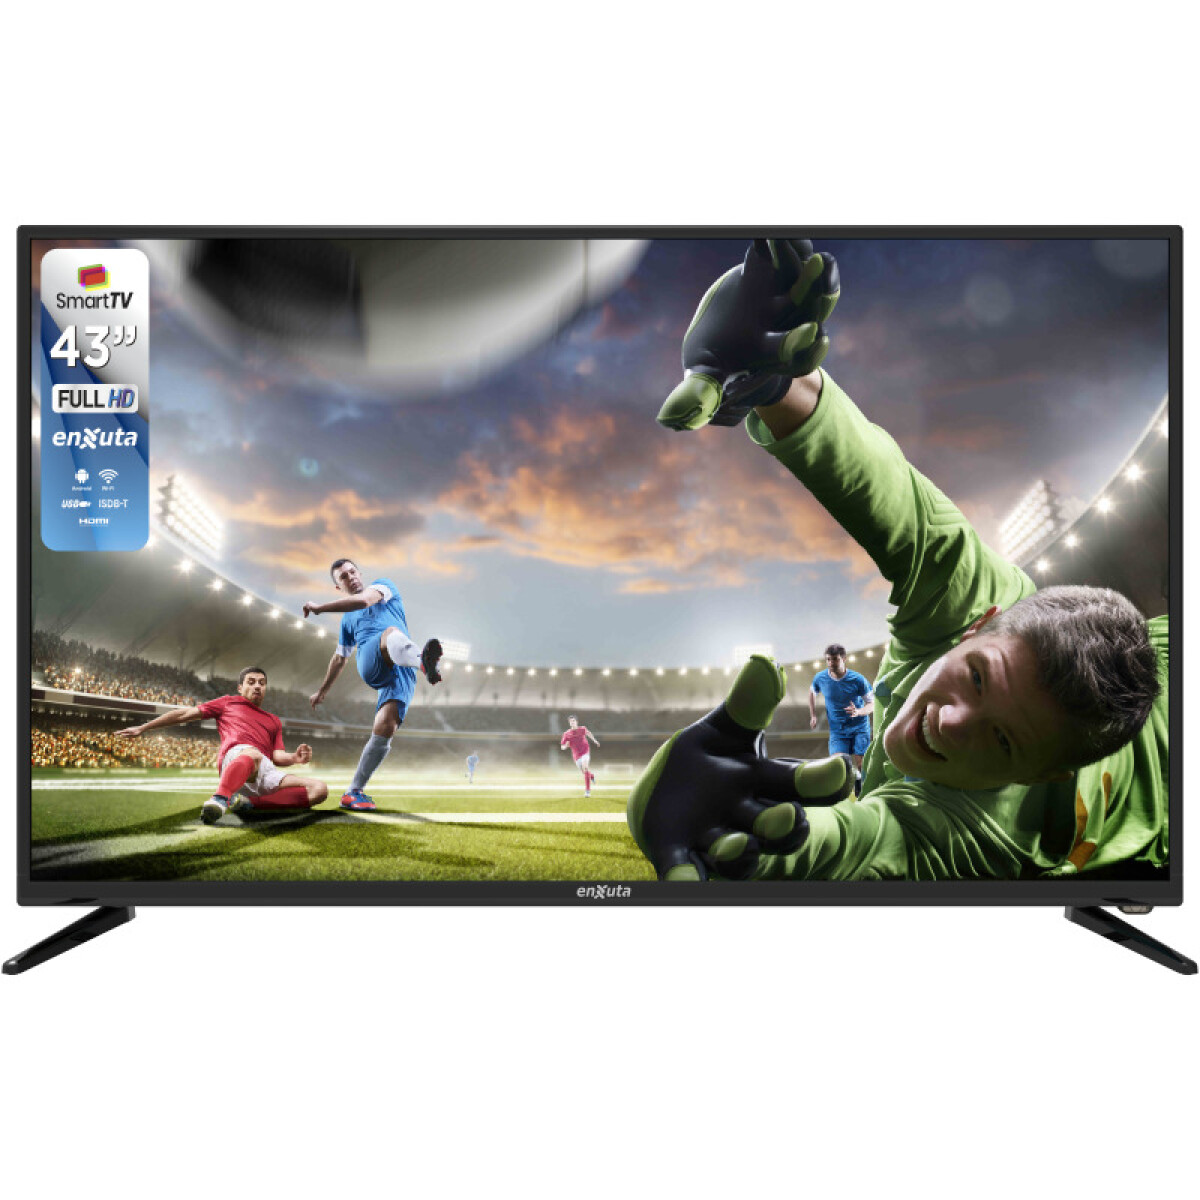 TV LED 43" Full HD Smart Enxuta 